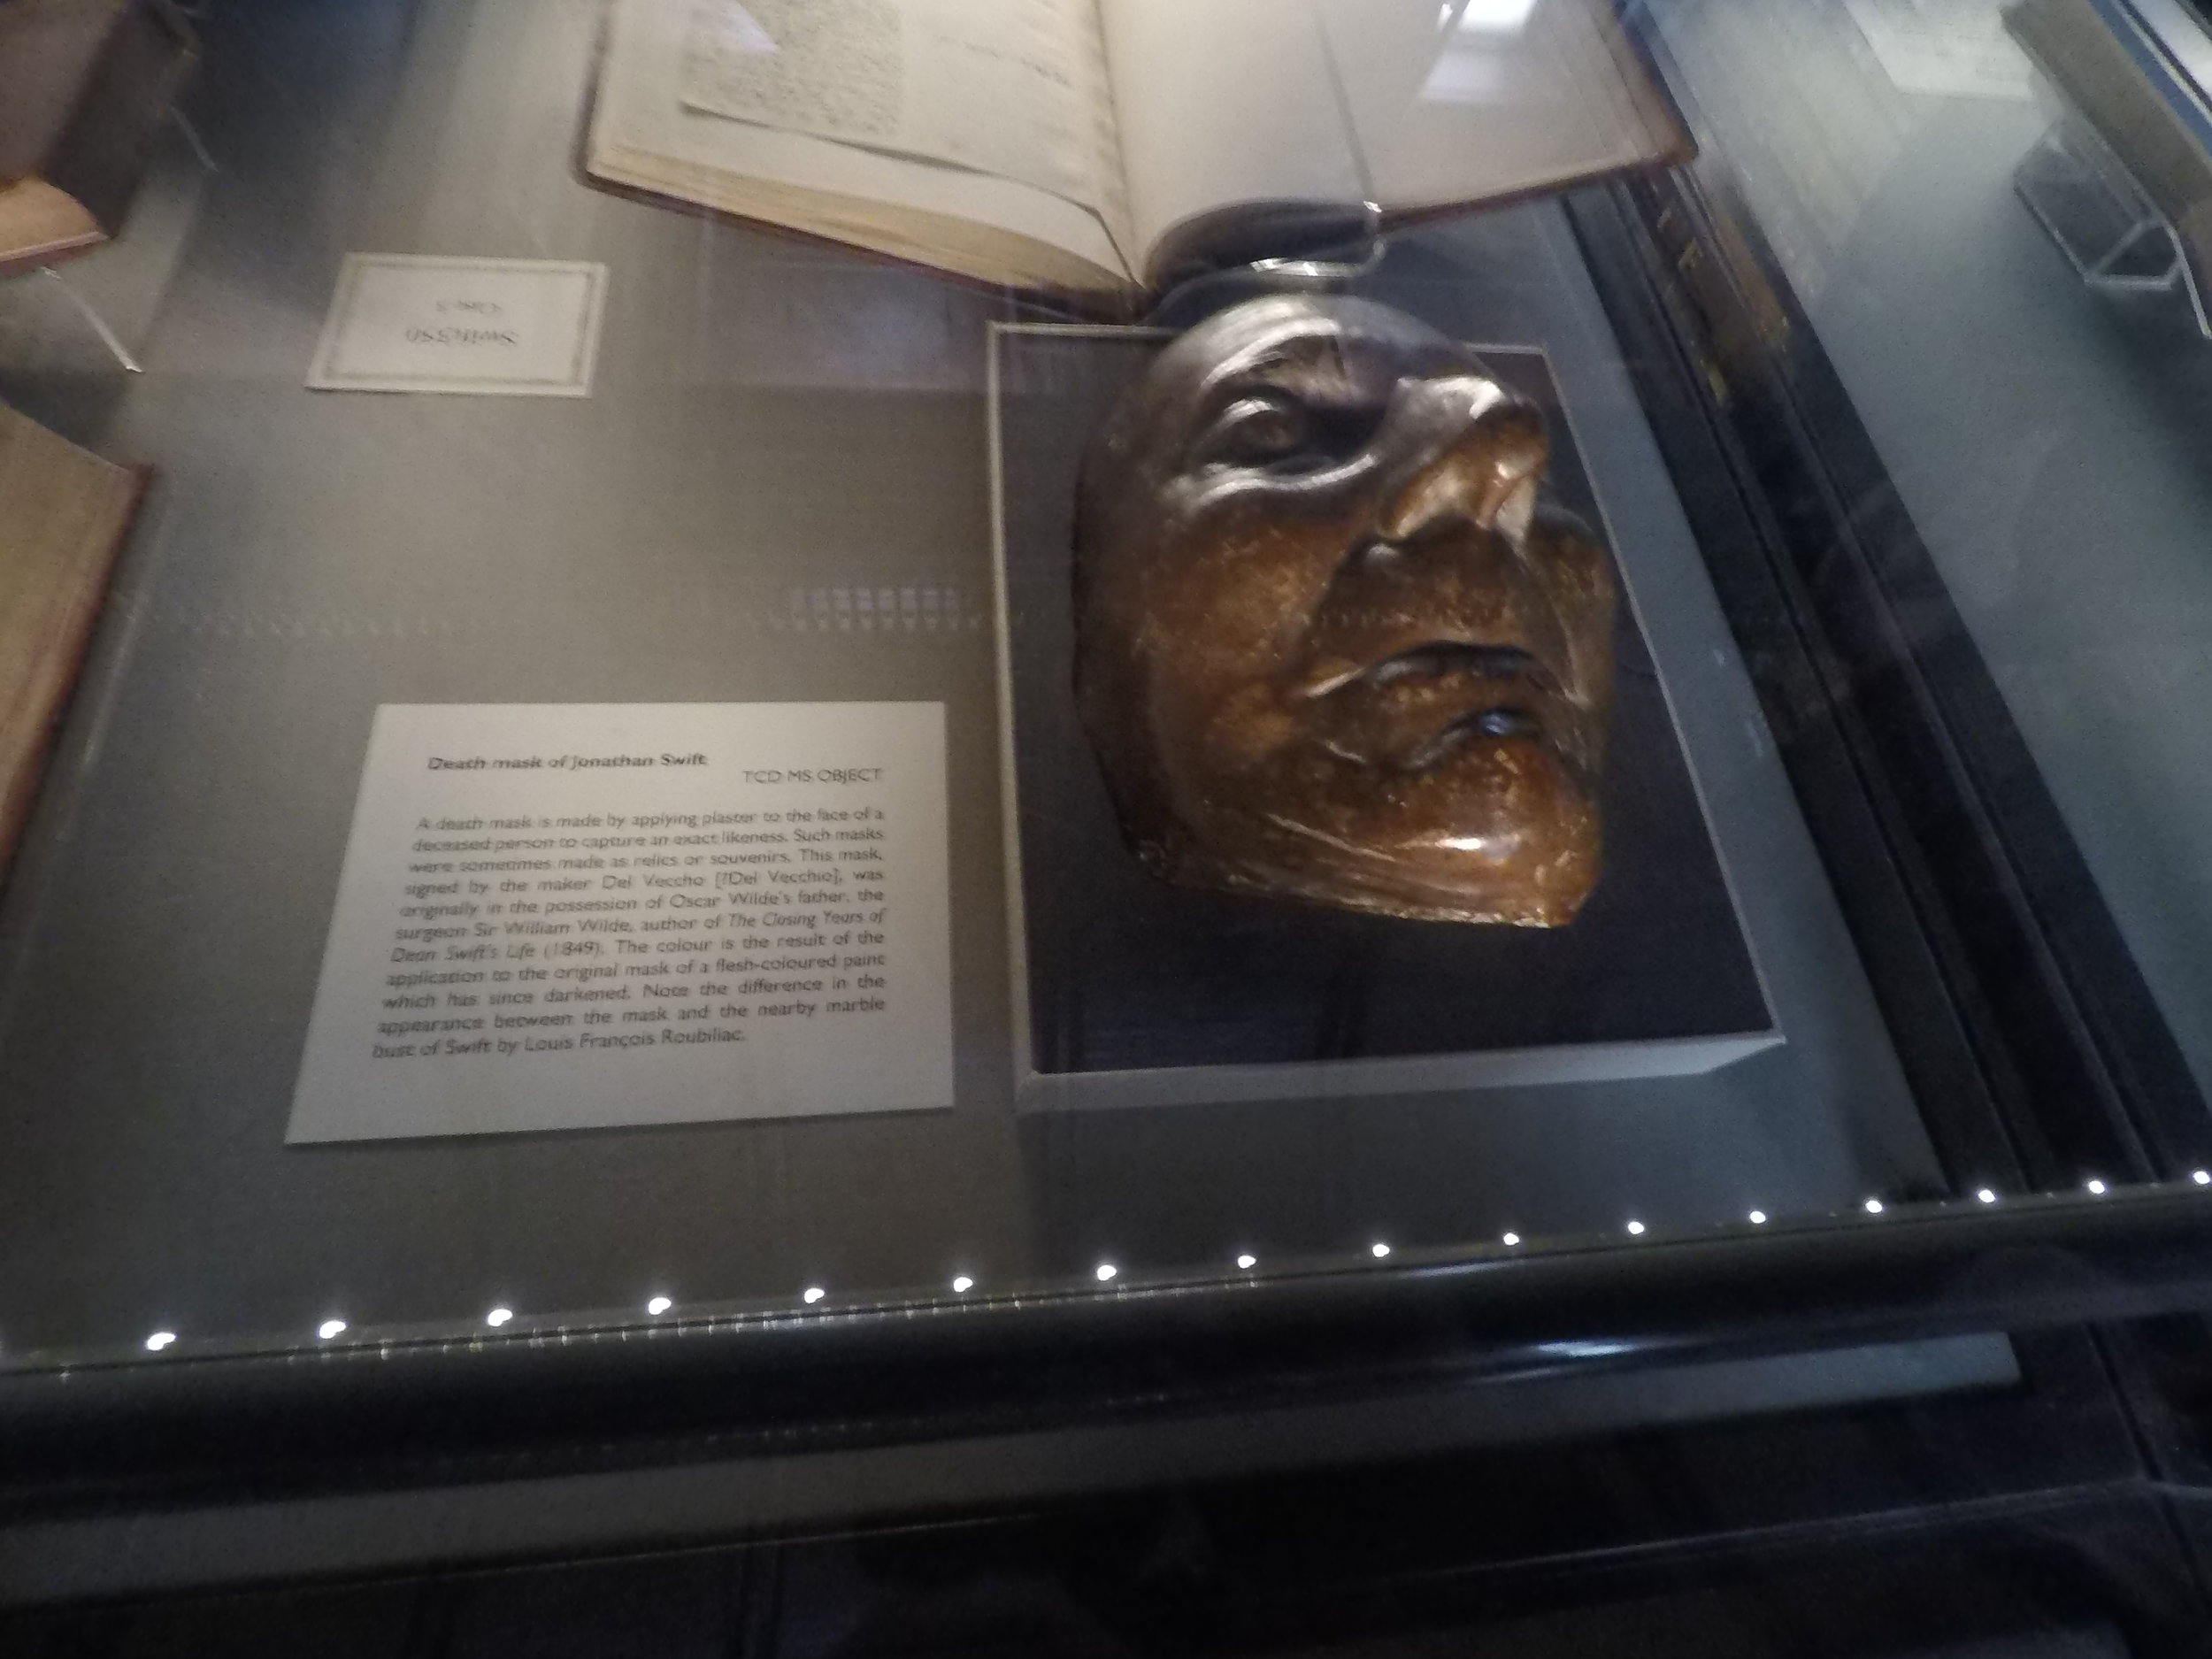 Jonathan Swift's death mask